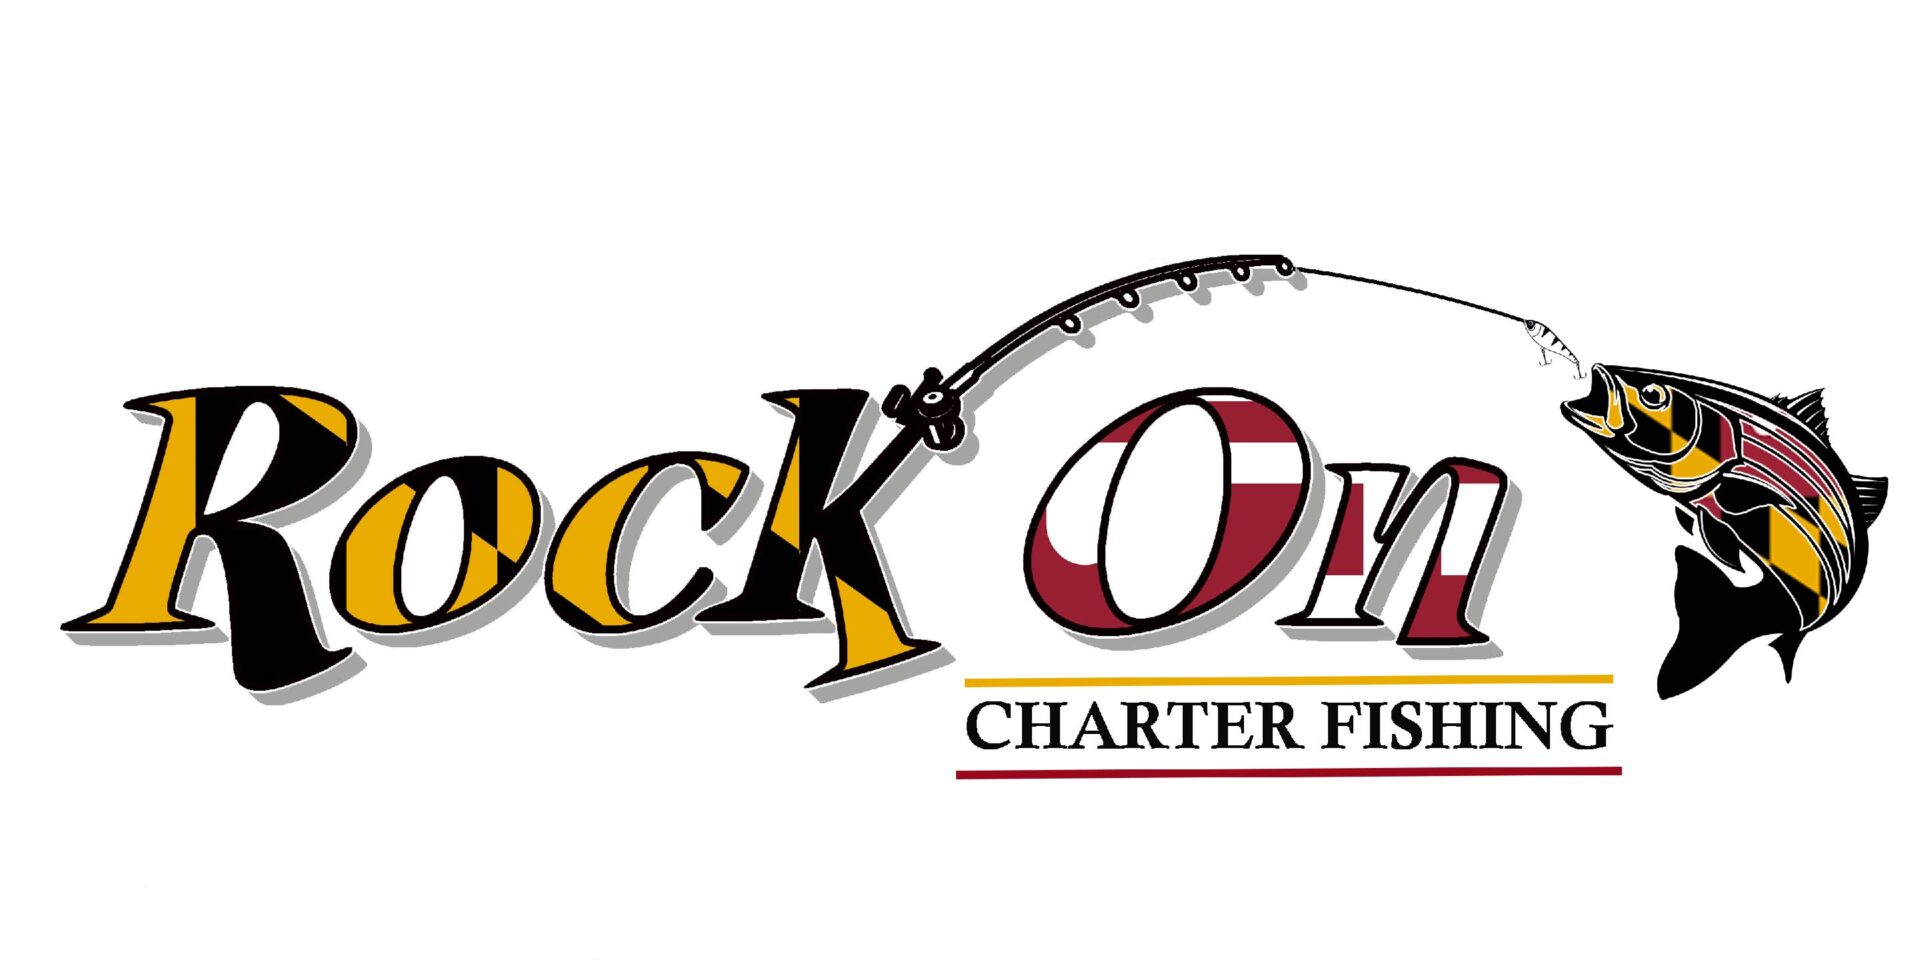 Rock on Final_Charter Fishing (002)